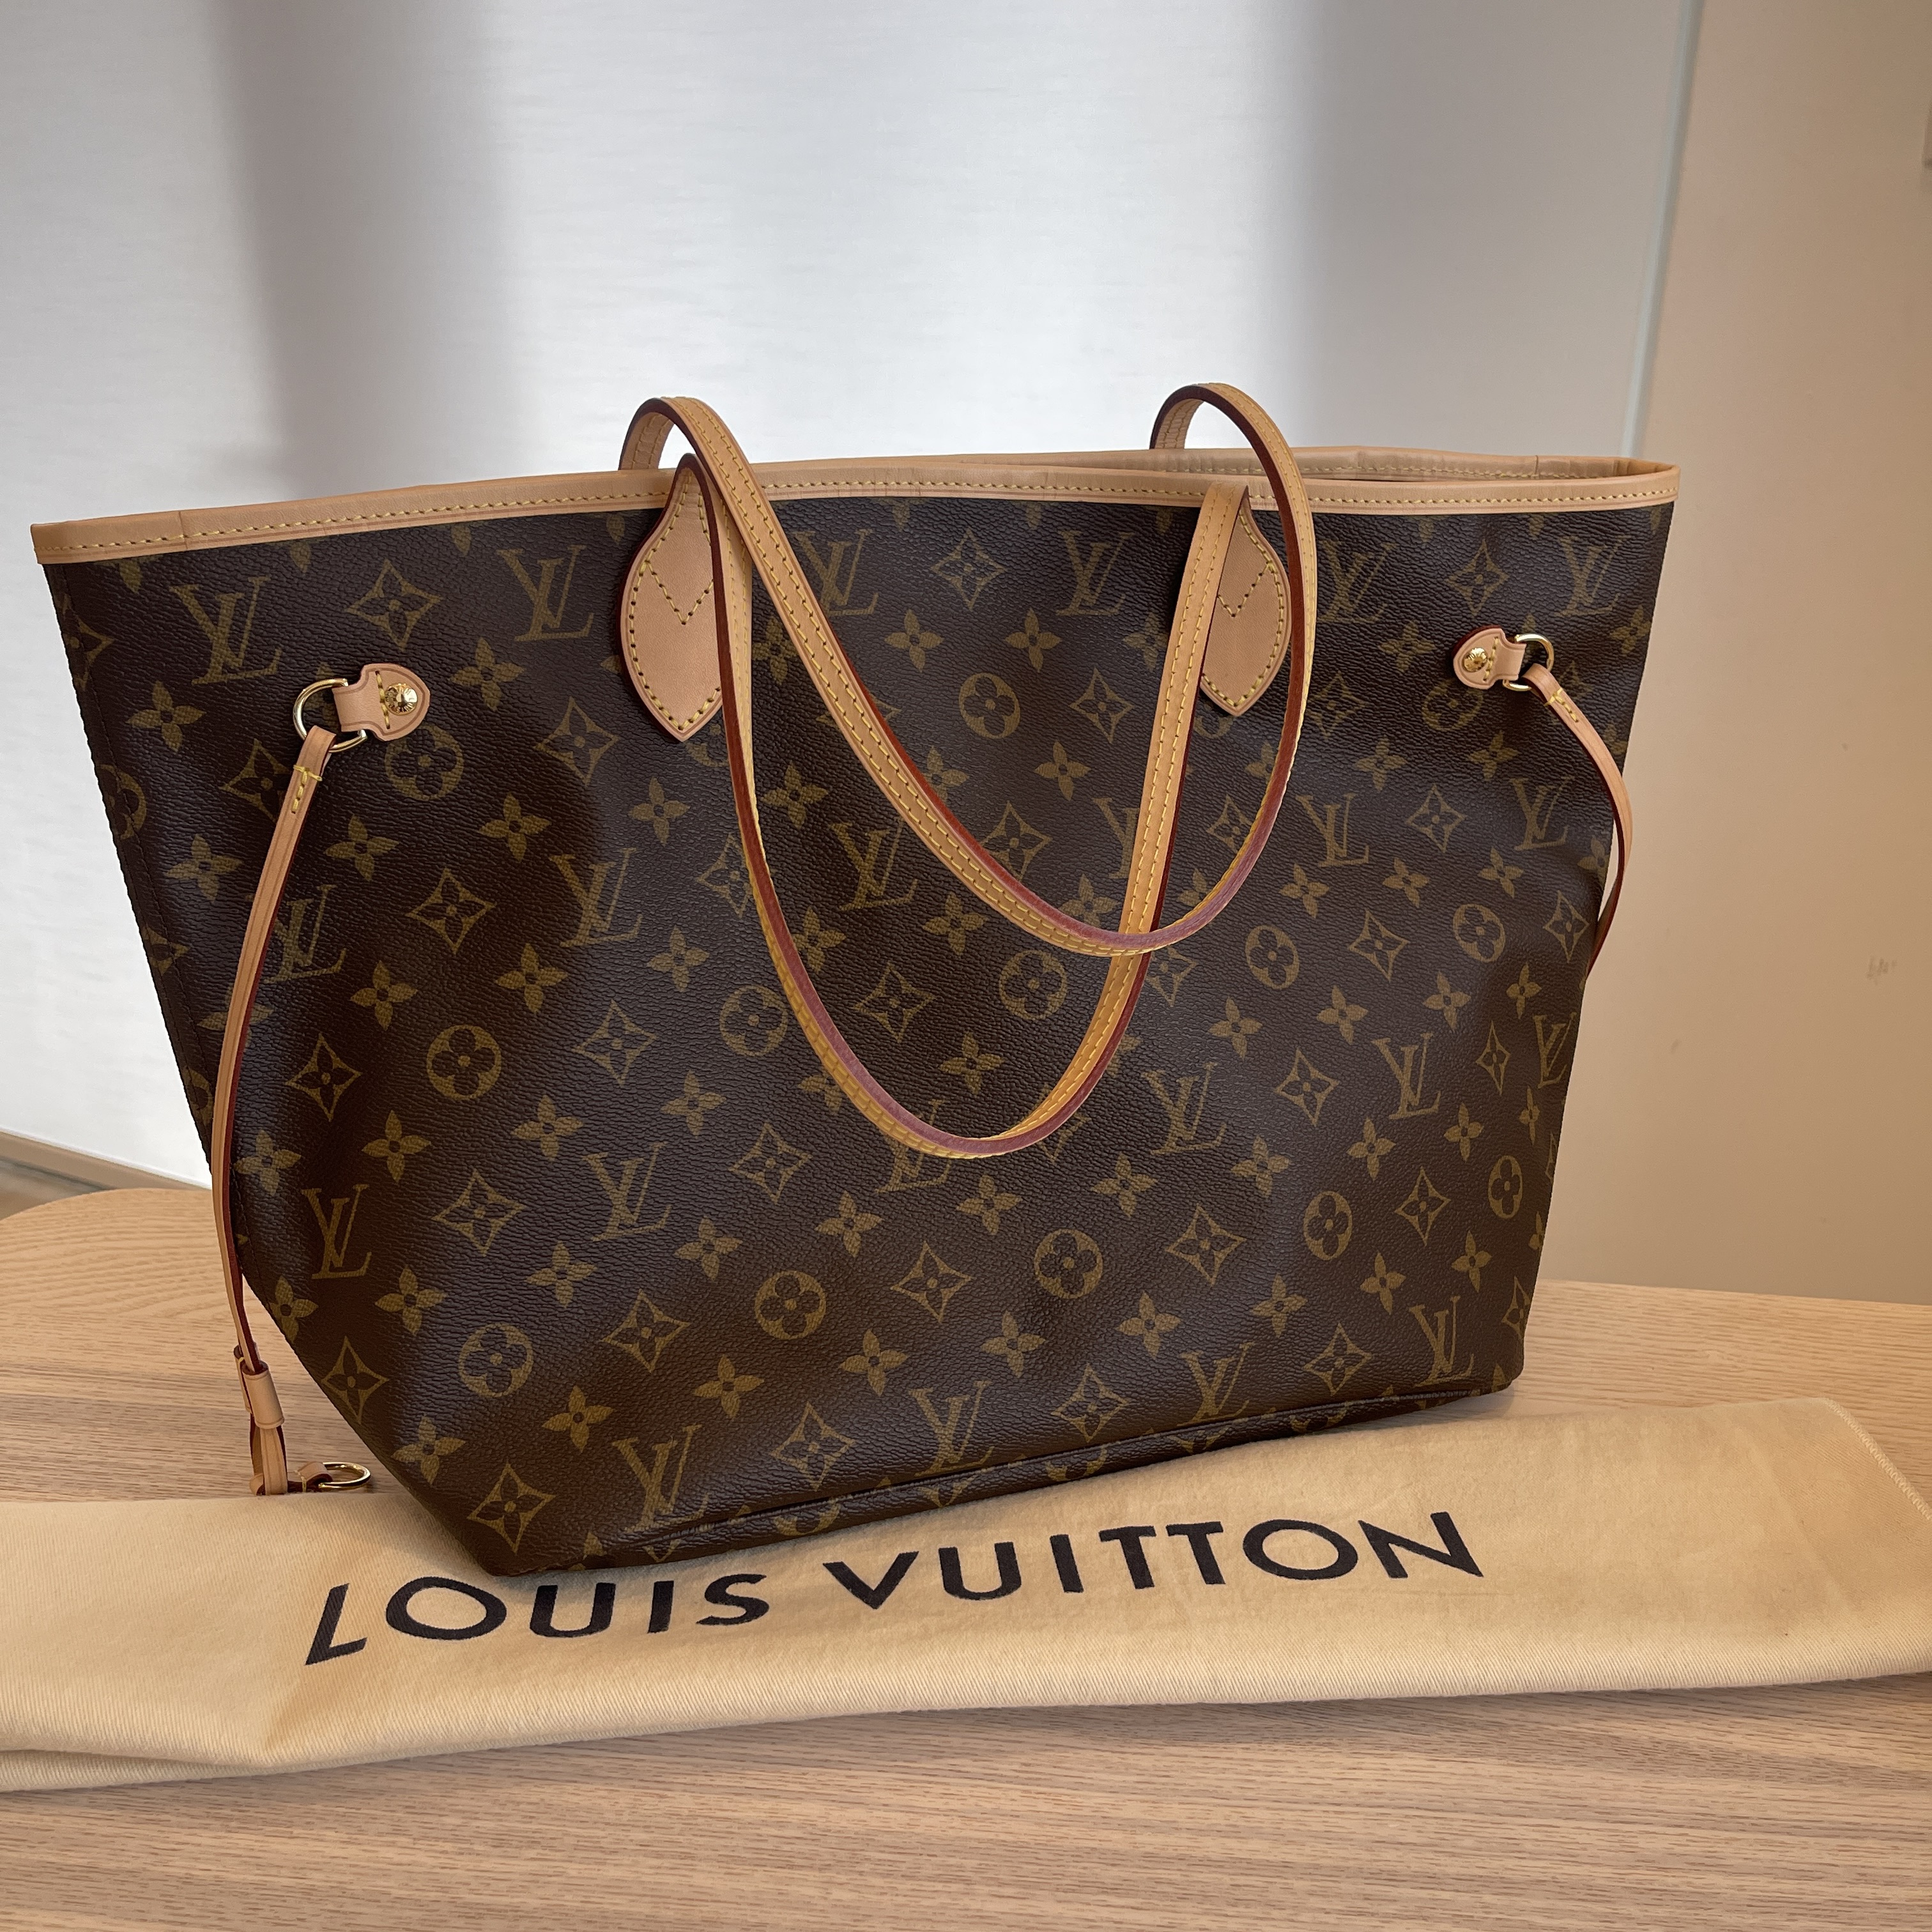 Louis Vuitton Monogram Neverfull MM Tote - Retail Price $2030